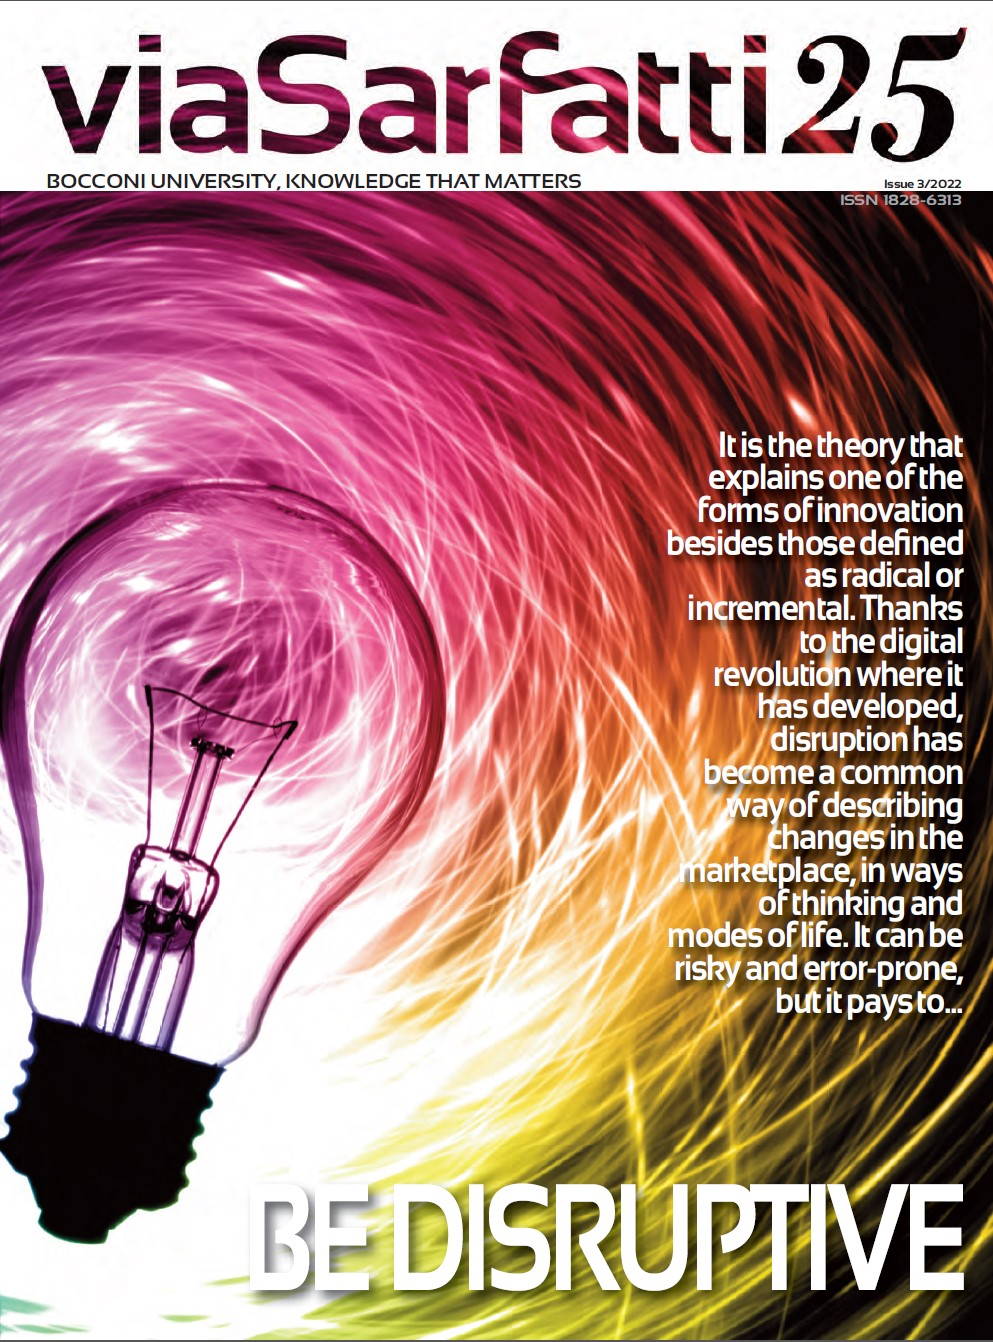 cover of the June issue of viaSarfatti25 magazine